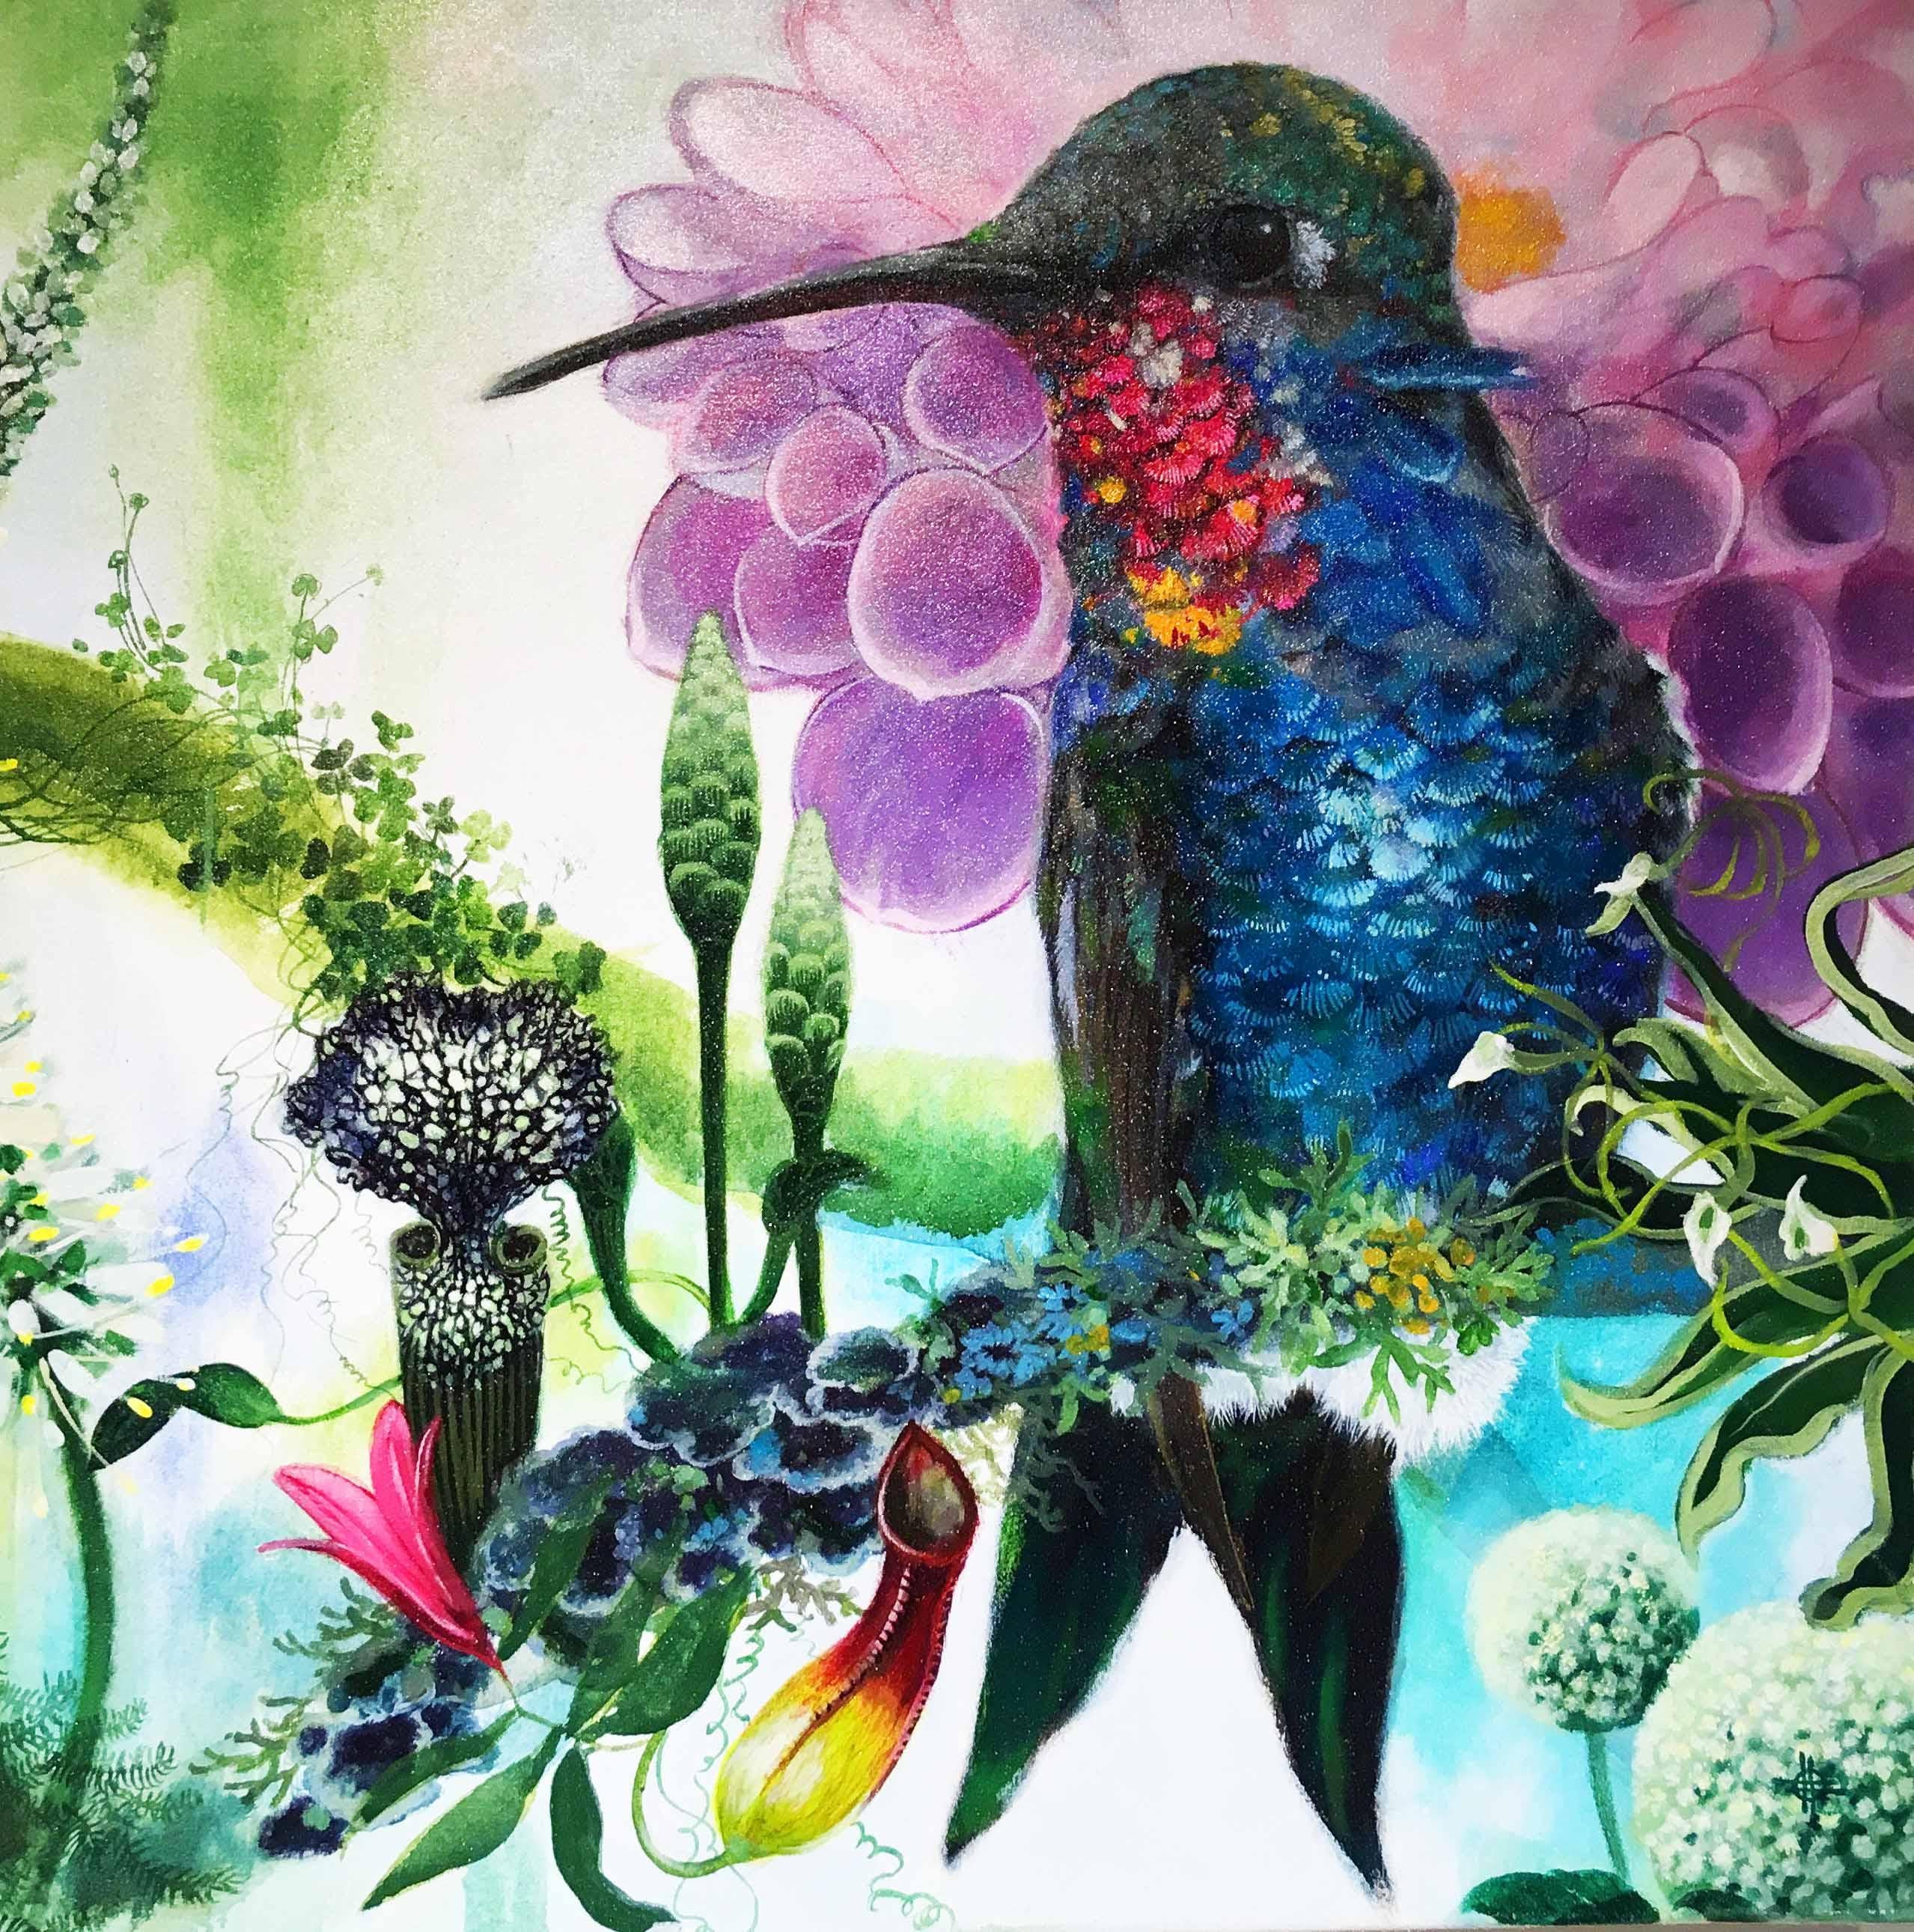 Hermes - vibrant illustrative bird and flora painting acrylic on canvas